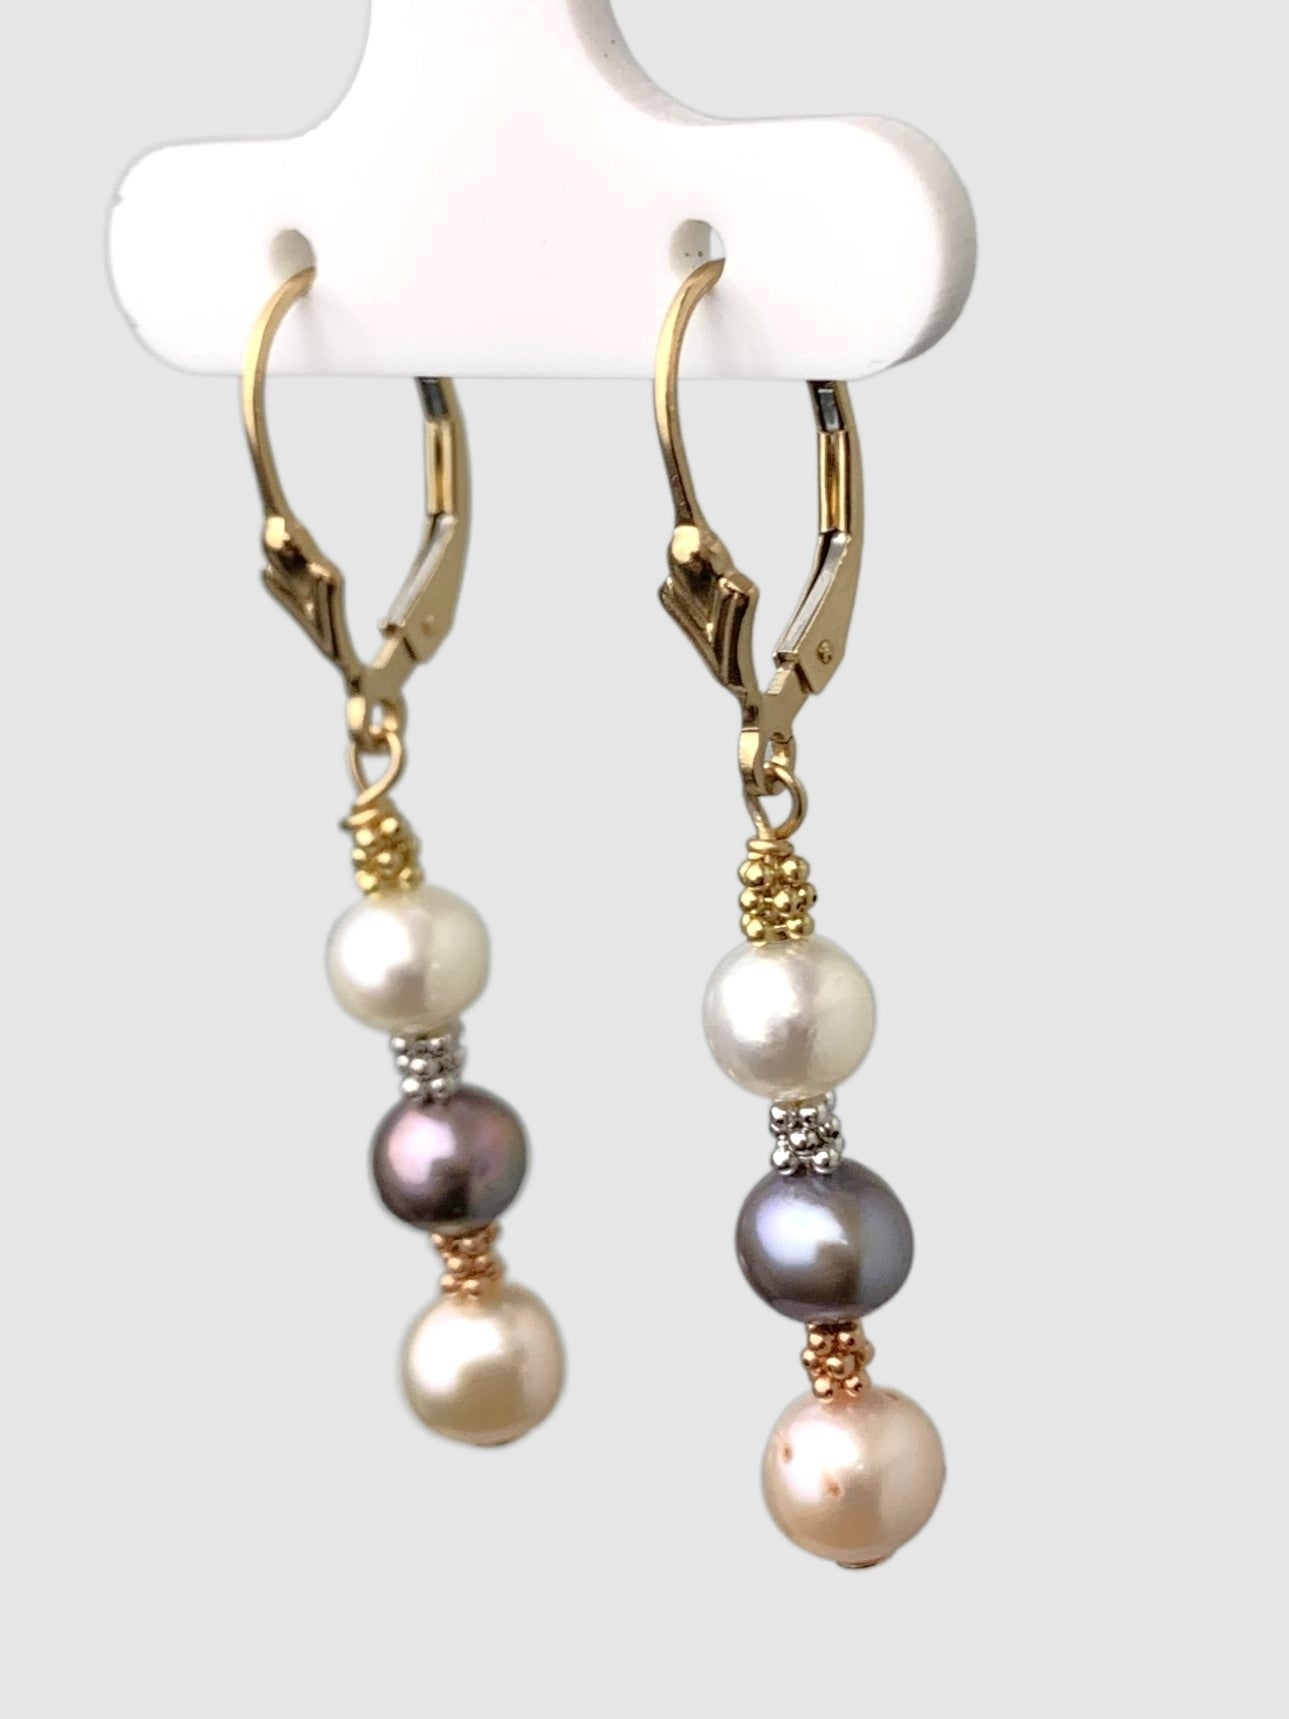 Pearl and Rondelle Drop Earrings in 14KY - EAR-015-WIREPRL14Y-M1